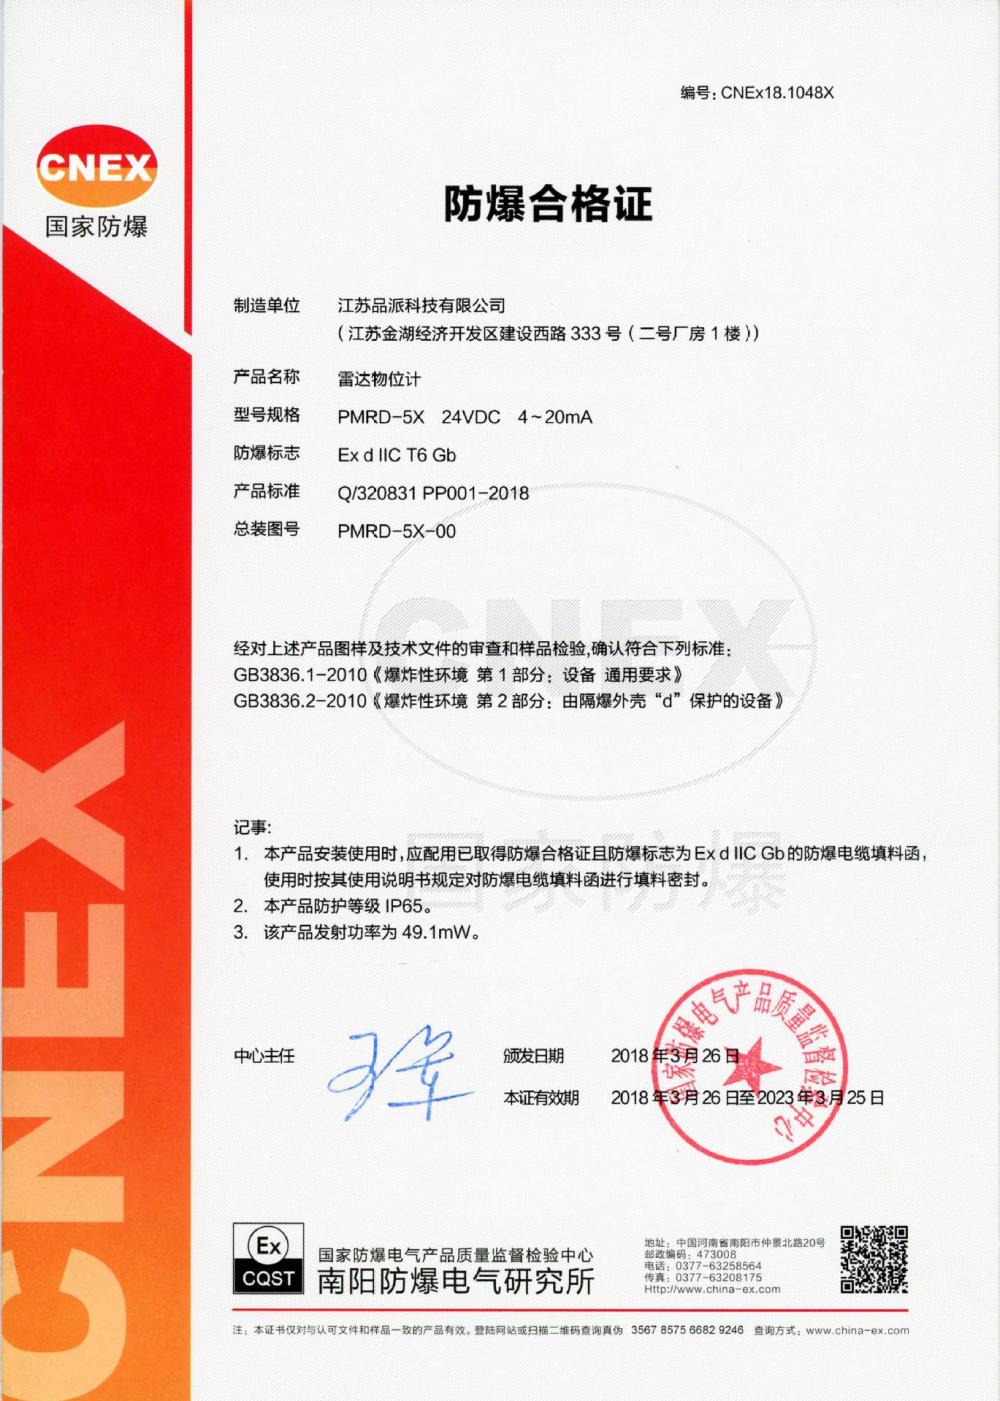 Explosion-proof certificate